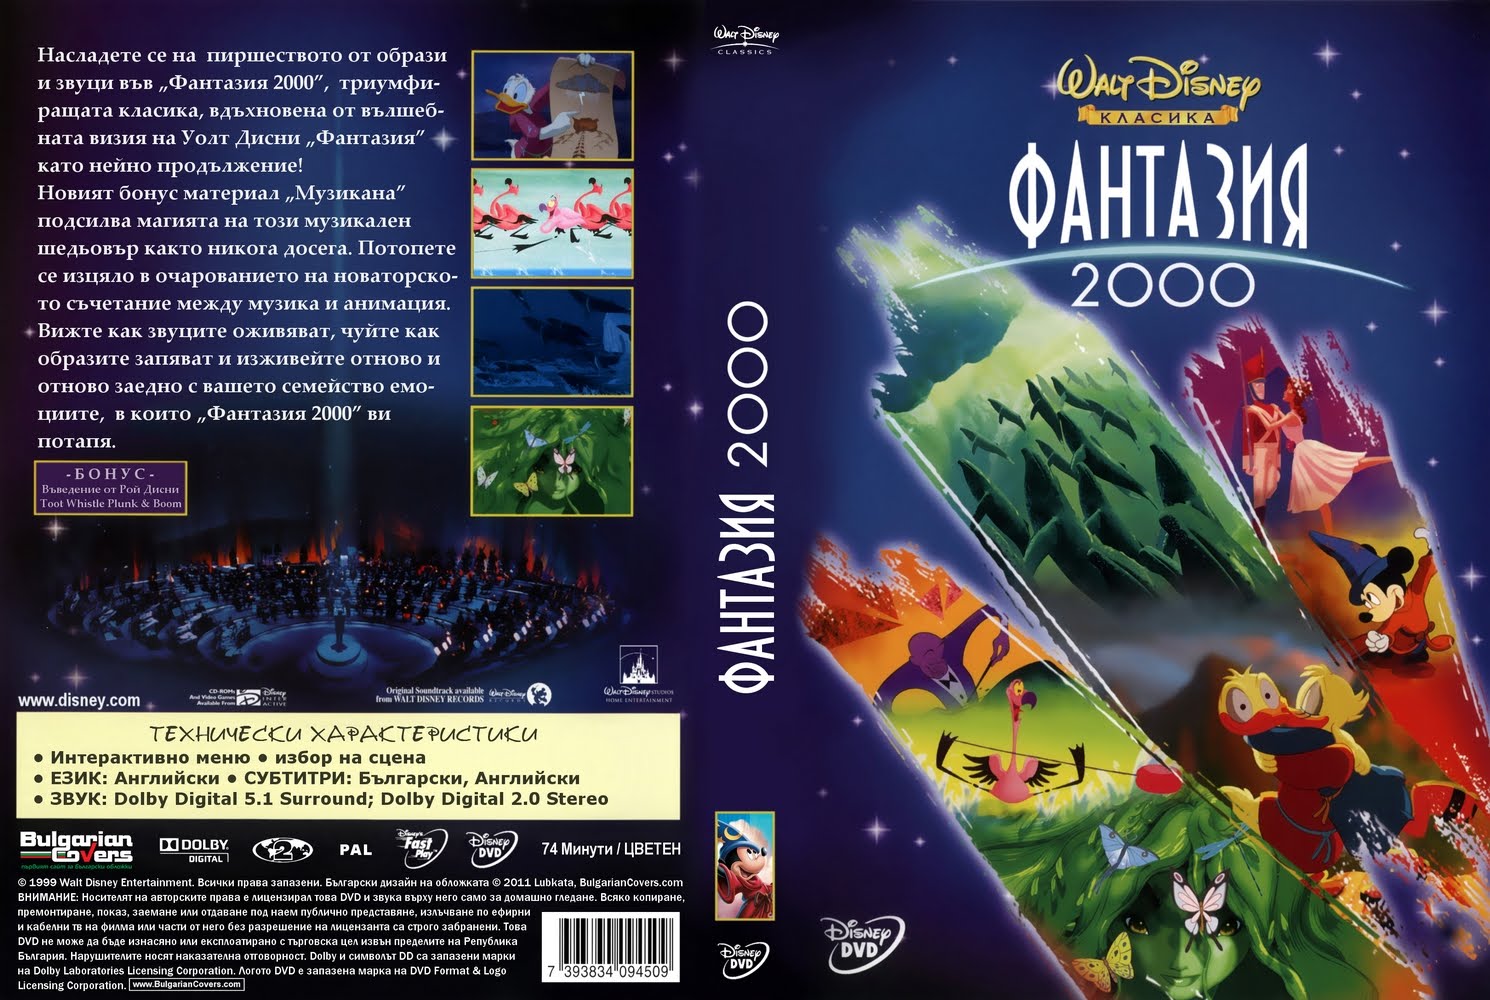 Fantasia 2000 dvd menu